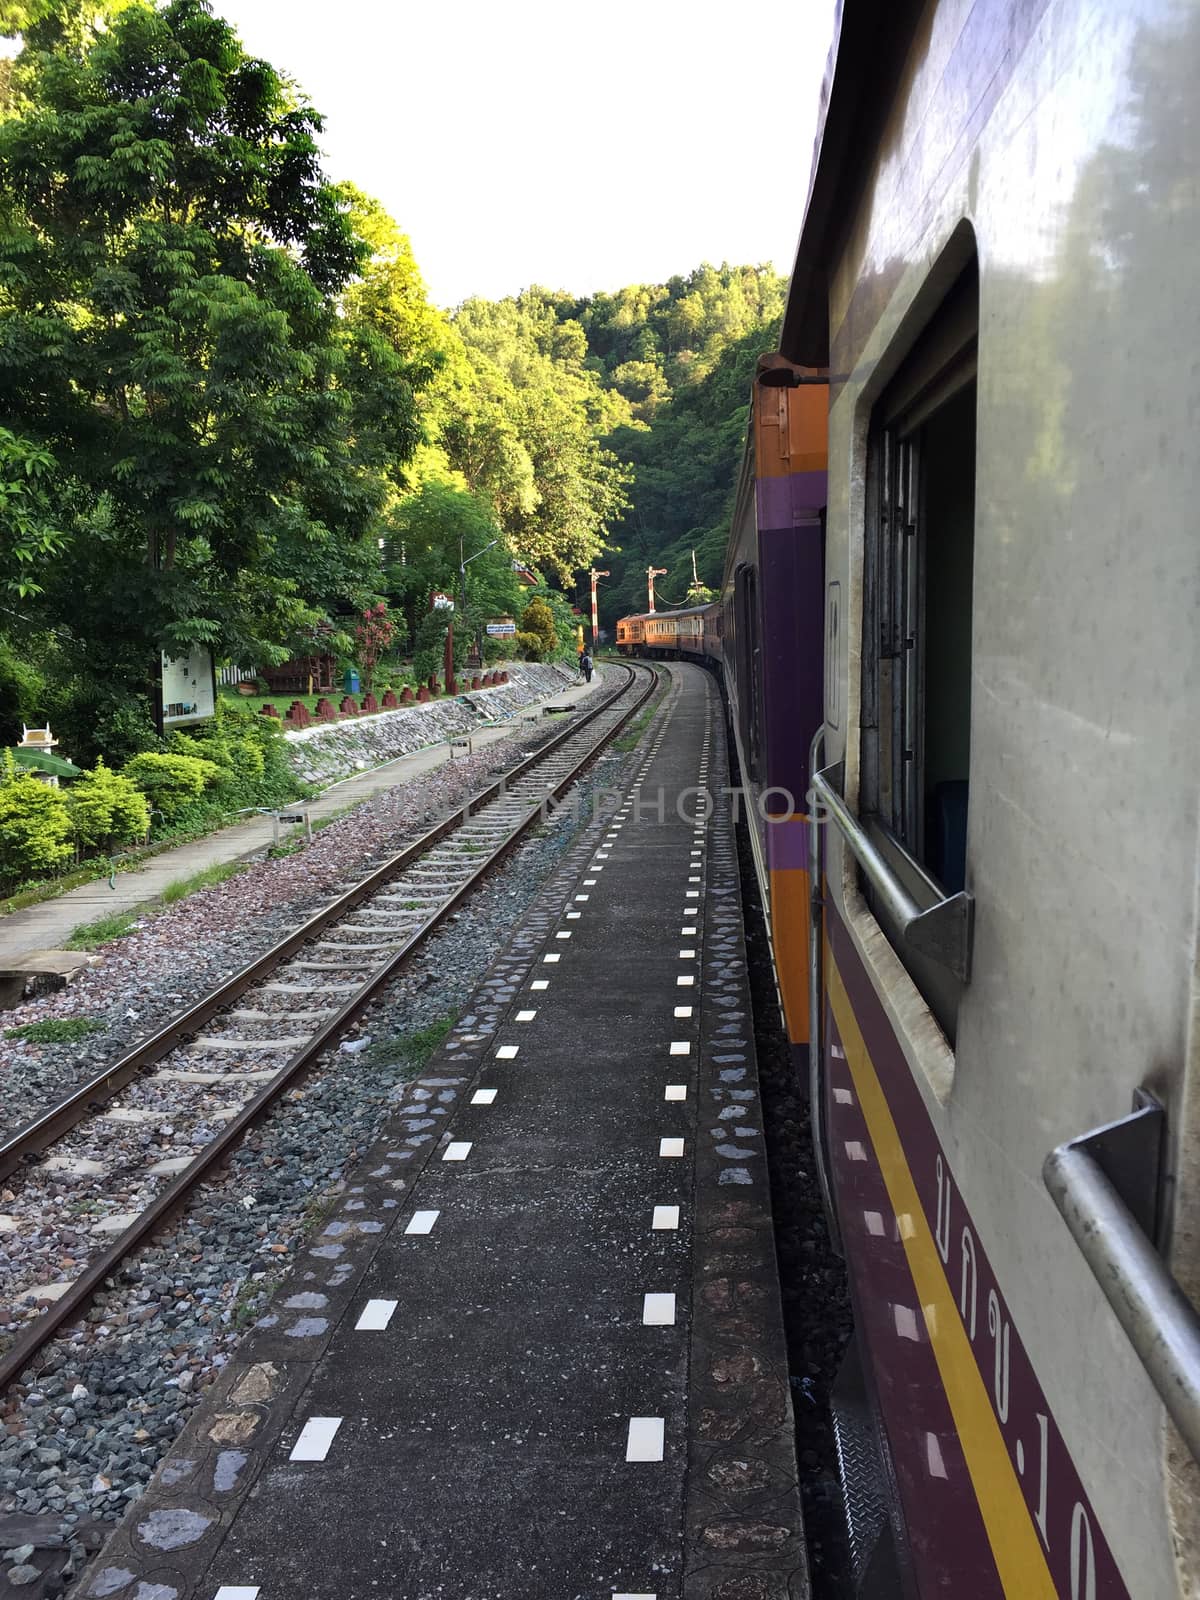 Railway tracks in a rural scene , Thai train travel routes